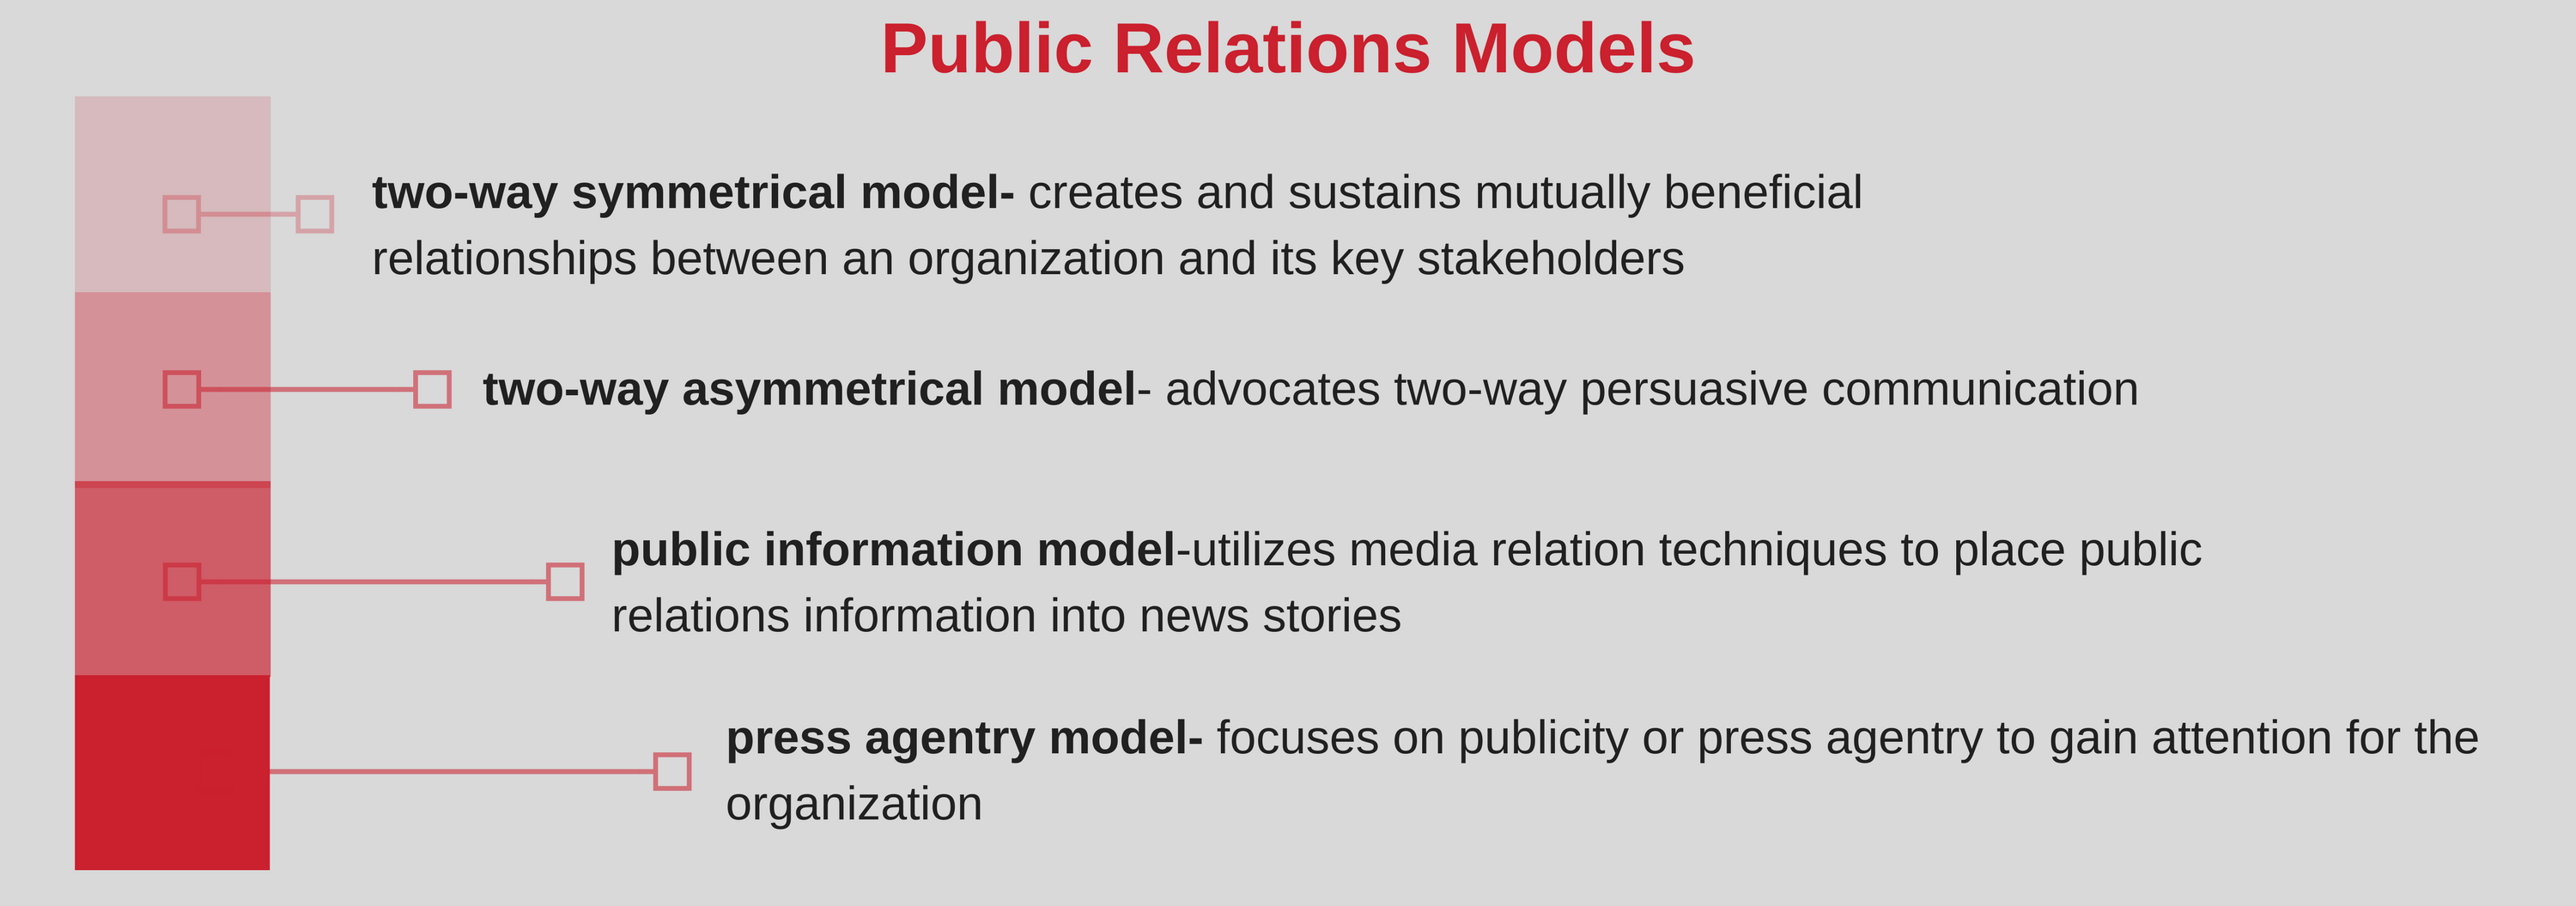 public information model of public relations